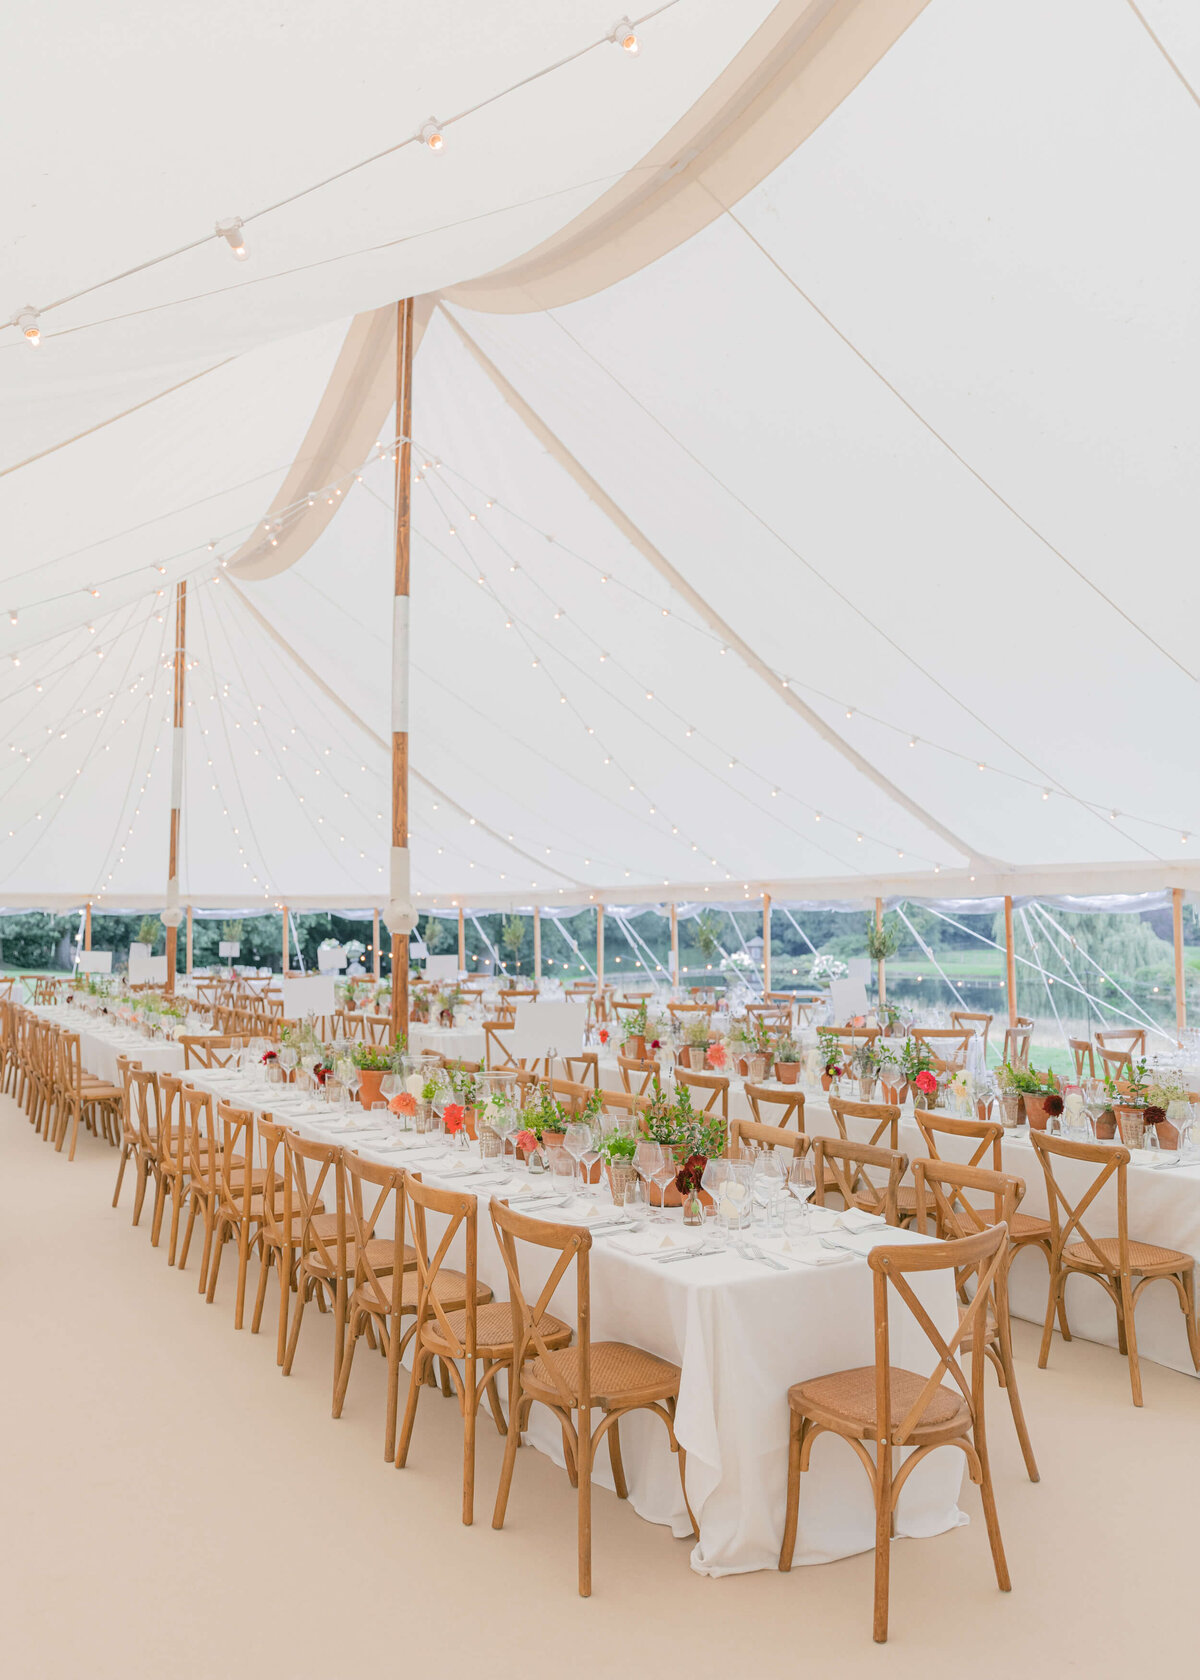 chloe-winstanley-weddings-sailcloth-tent-italian-tablesapce